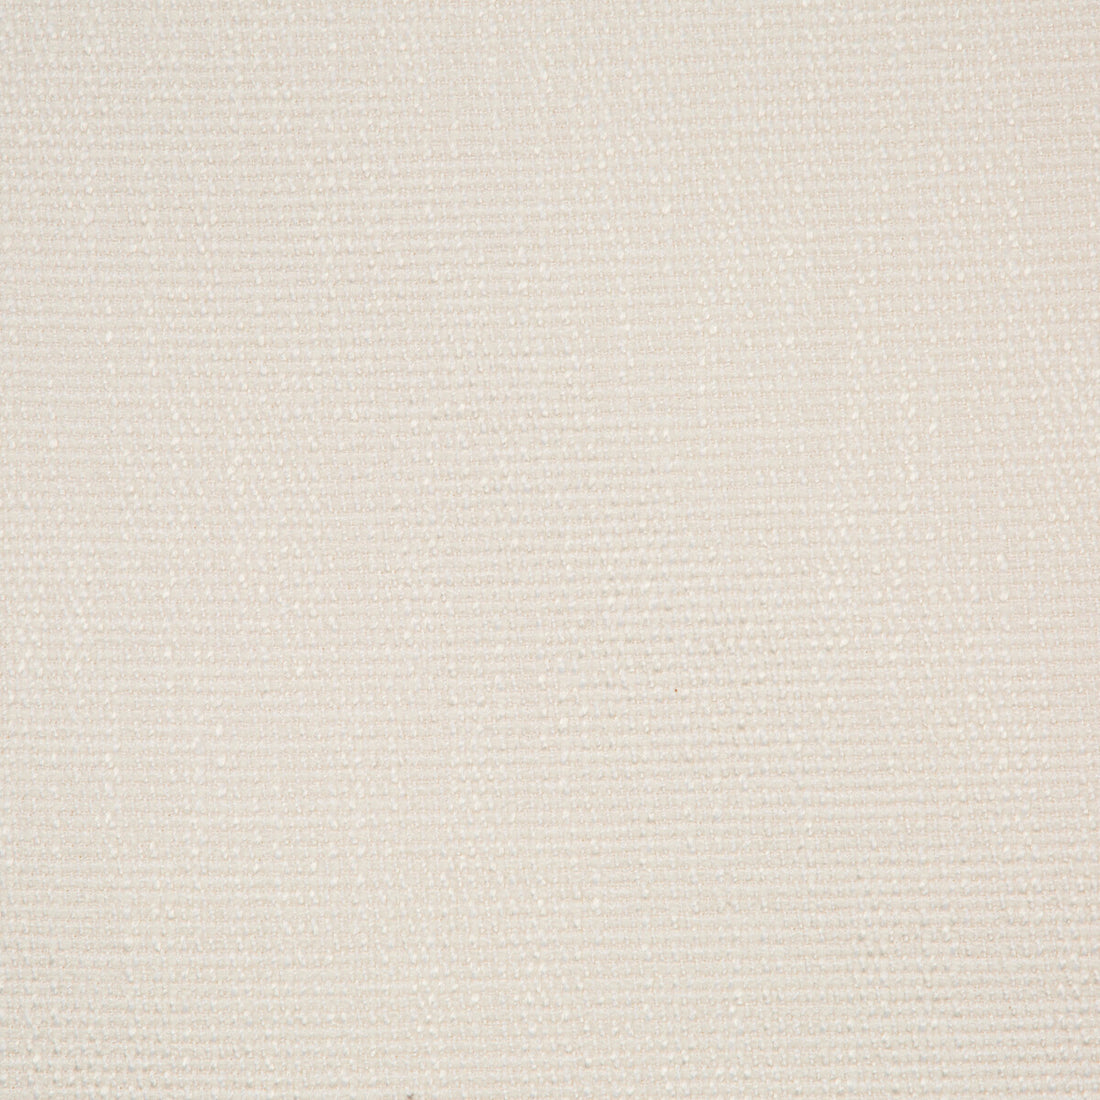 Kravet Smart fabric in 35943-101 color - pattern 35943.101.0 - by Kravet Smart in the Performance Kravetarmor collection